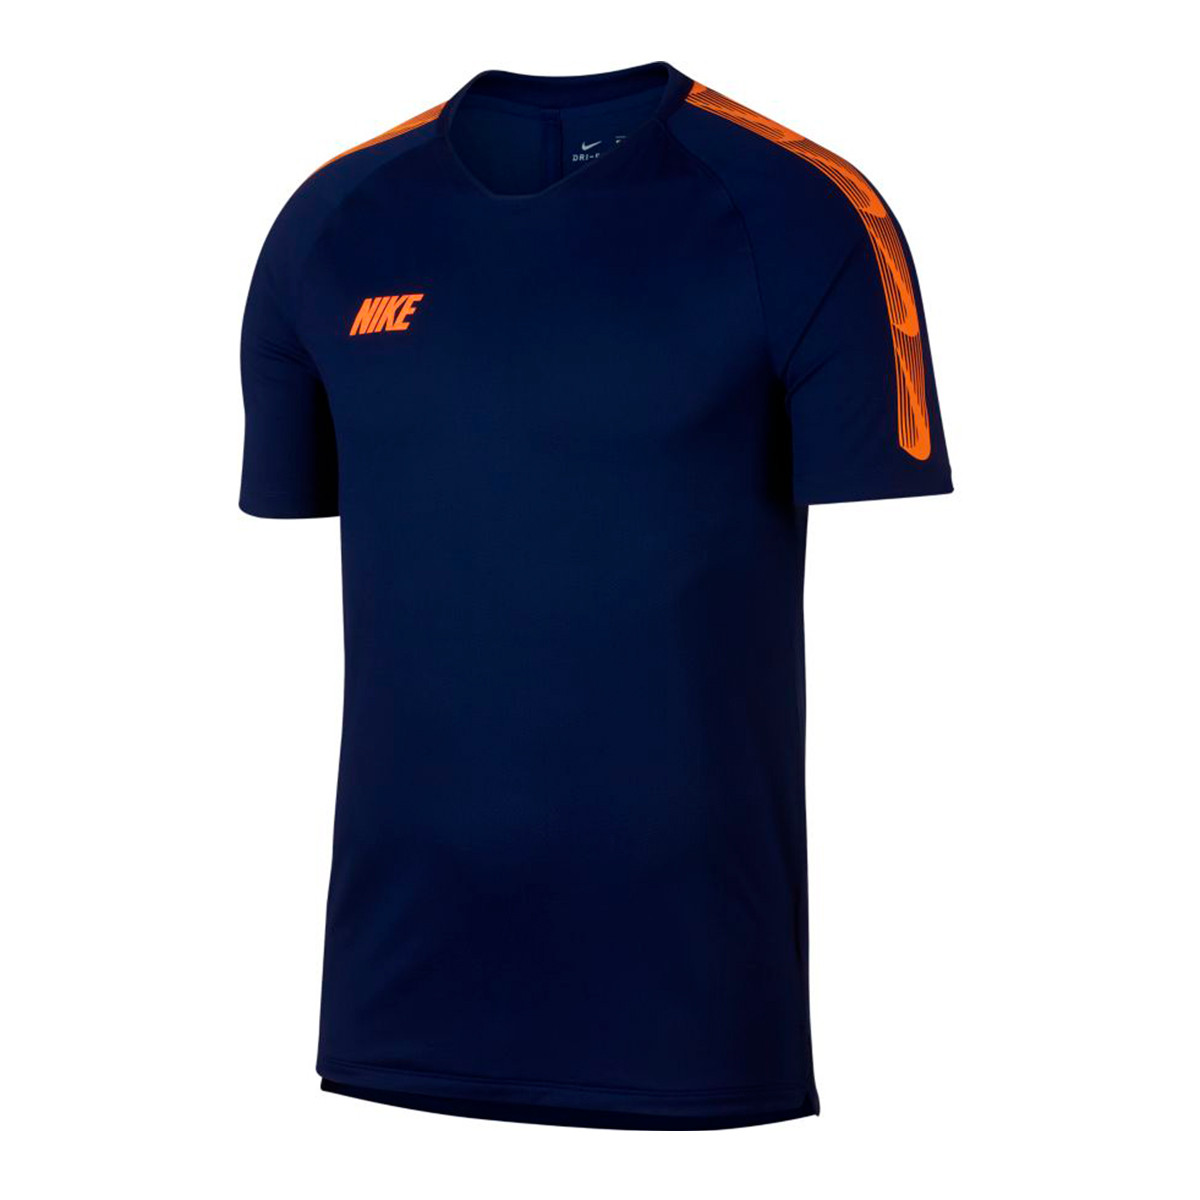 orange and blue jersey